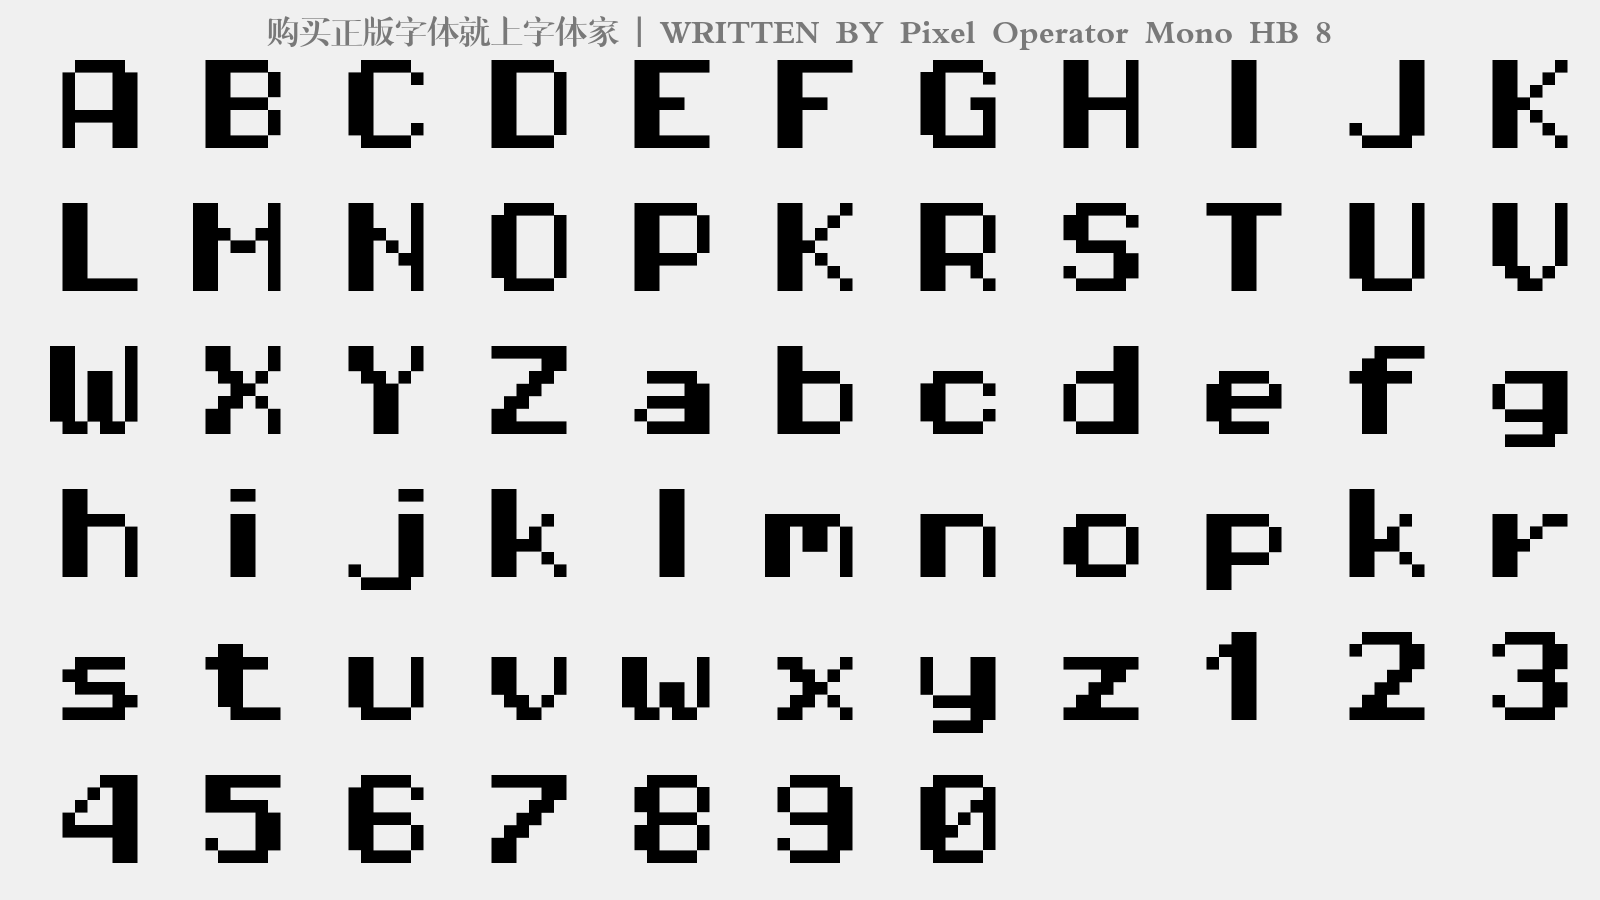 Pixel Operator Mono HB 8 - 大写字母/小写字母/数字